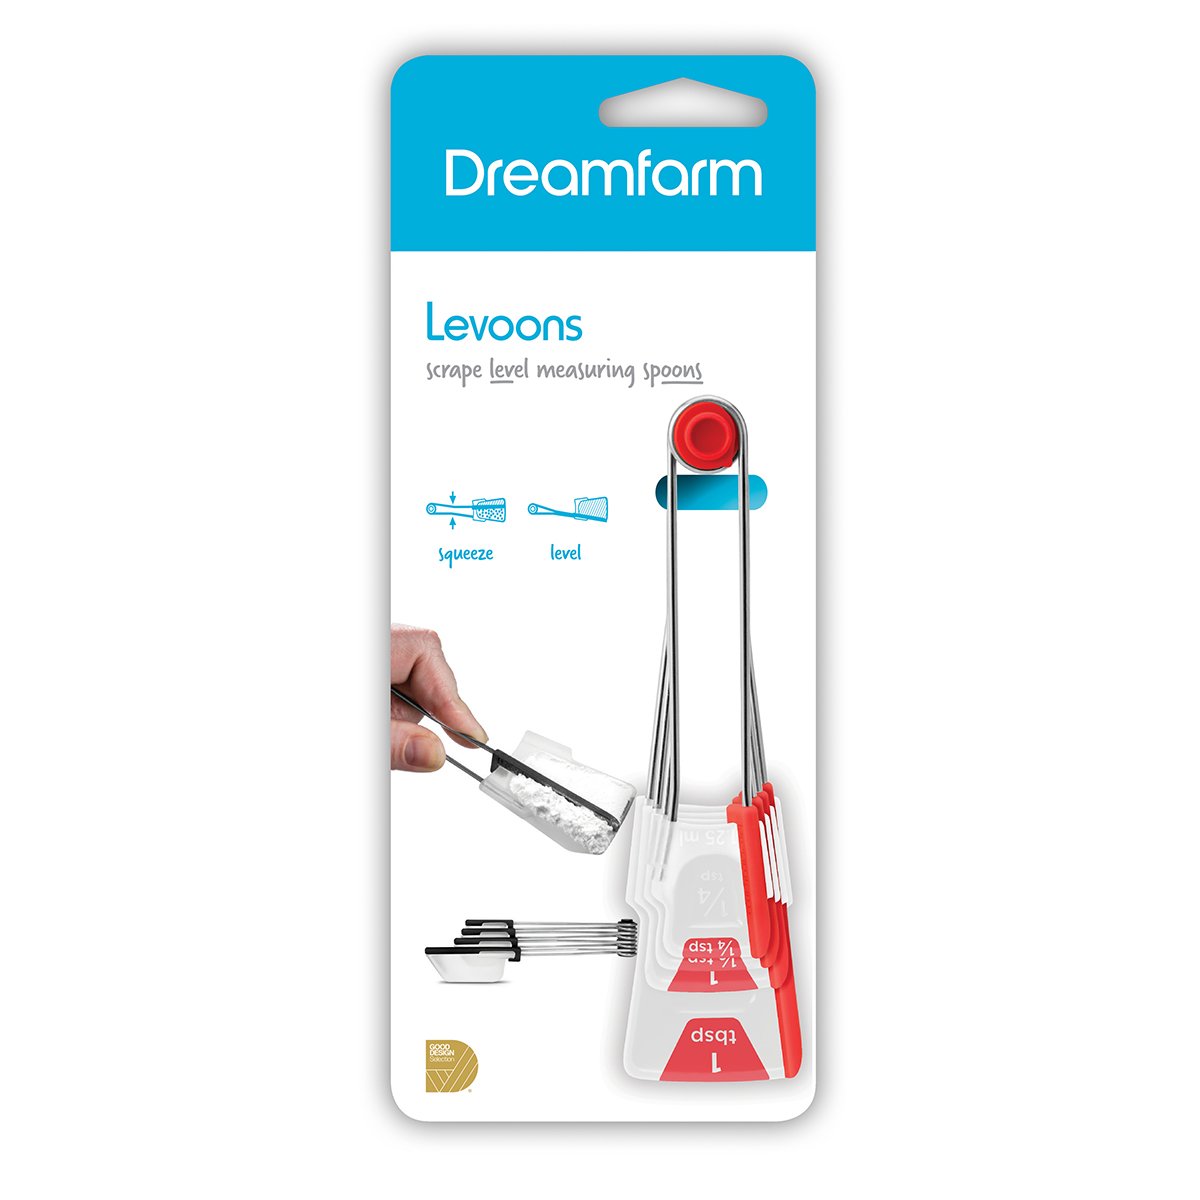 Dreamfarm Levoons Self-Levelling Measuring Spoons - Cookin